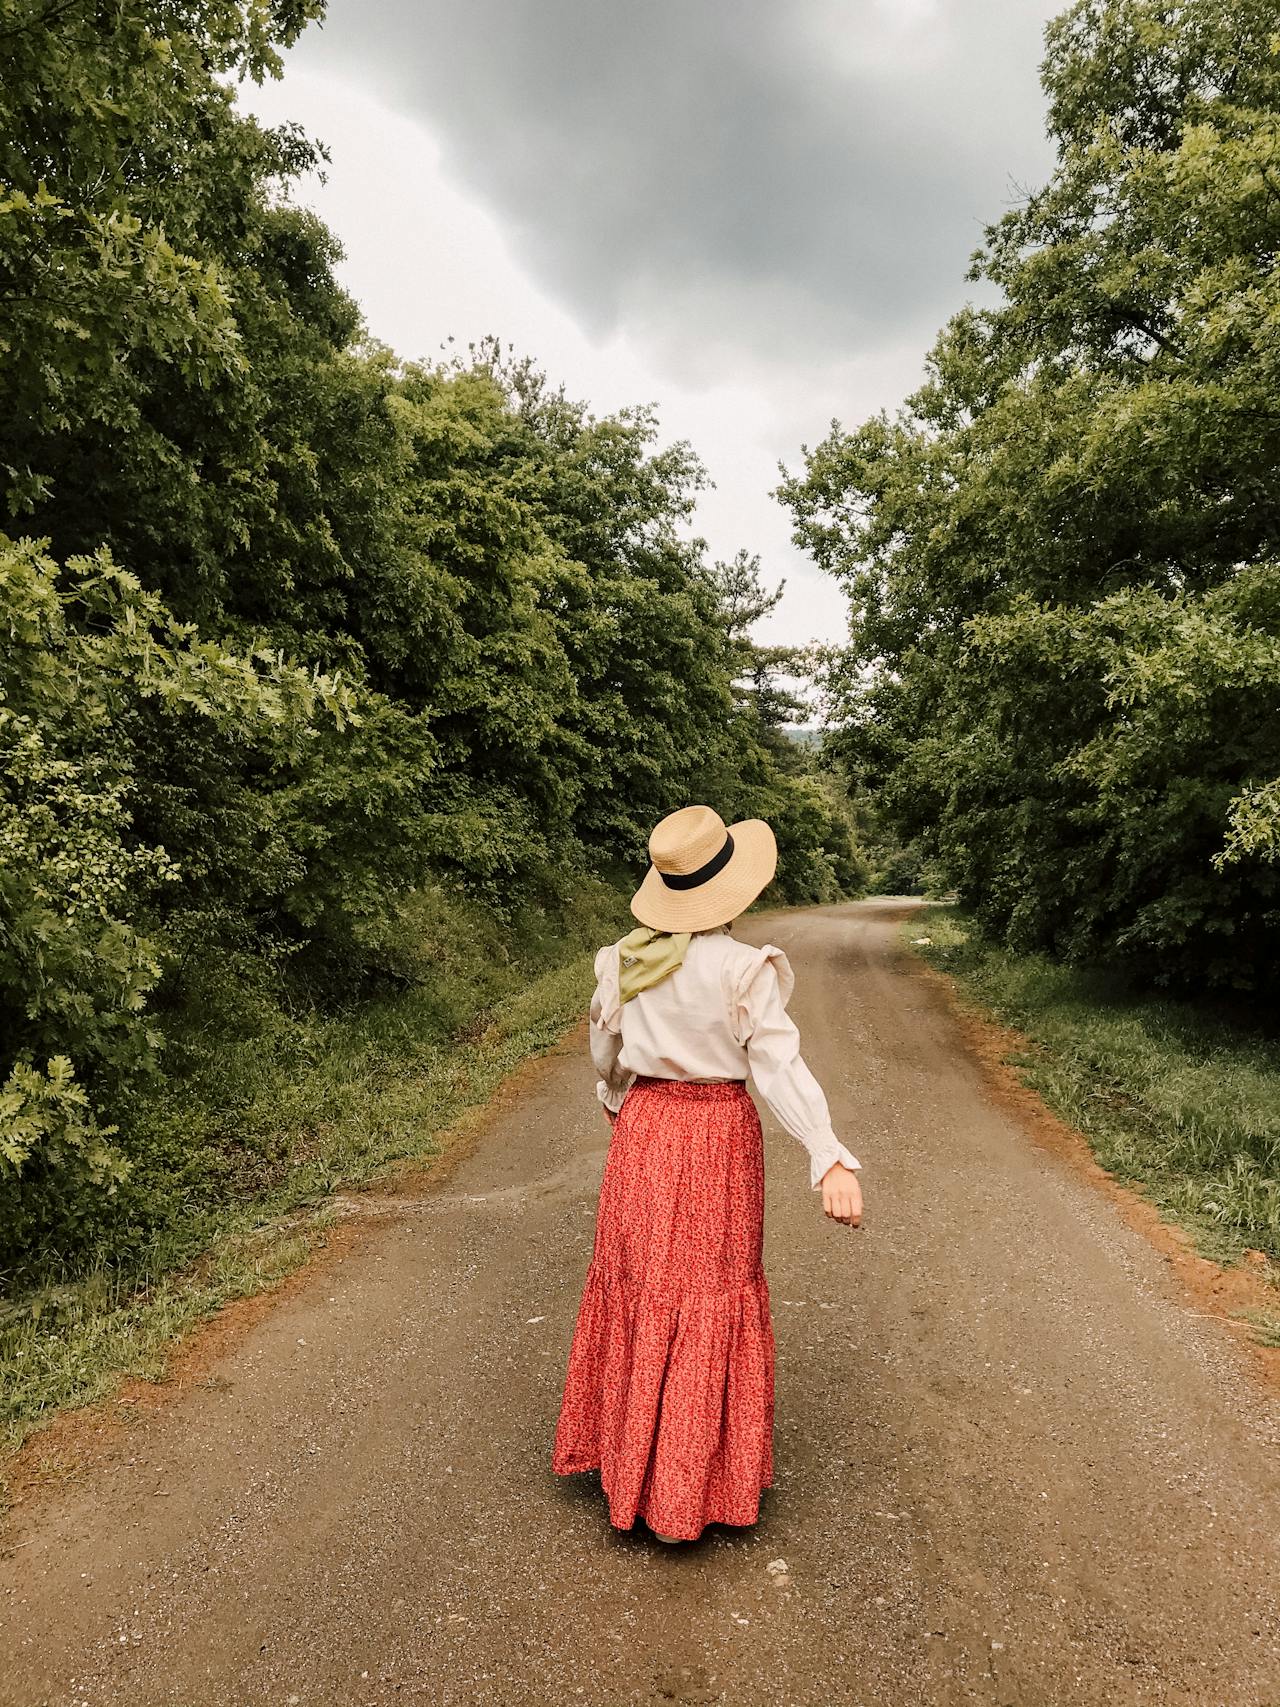 Woman taking a peaceful walk along dirt road as she enjoys life.